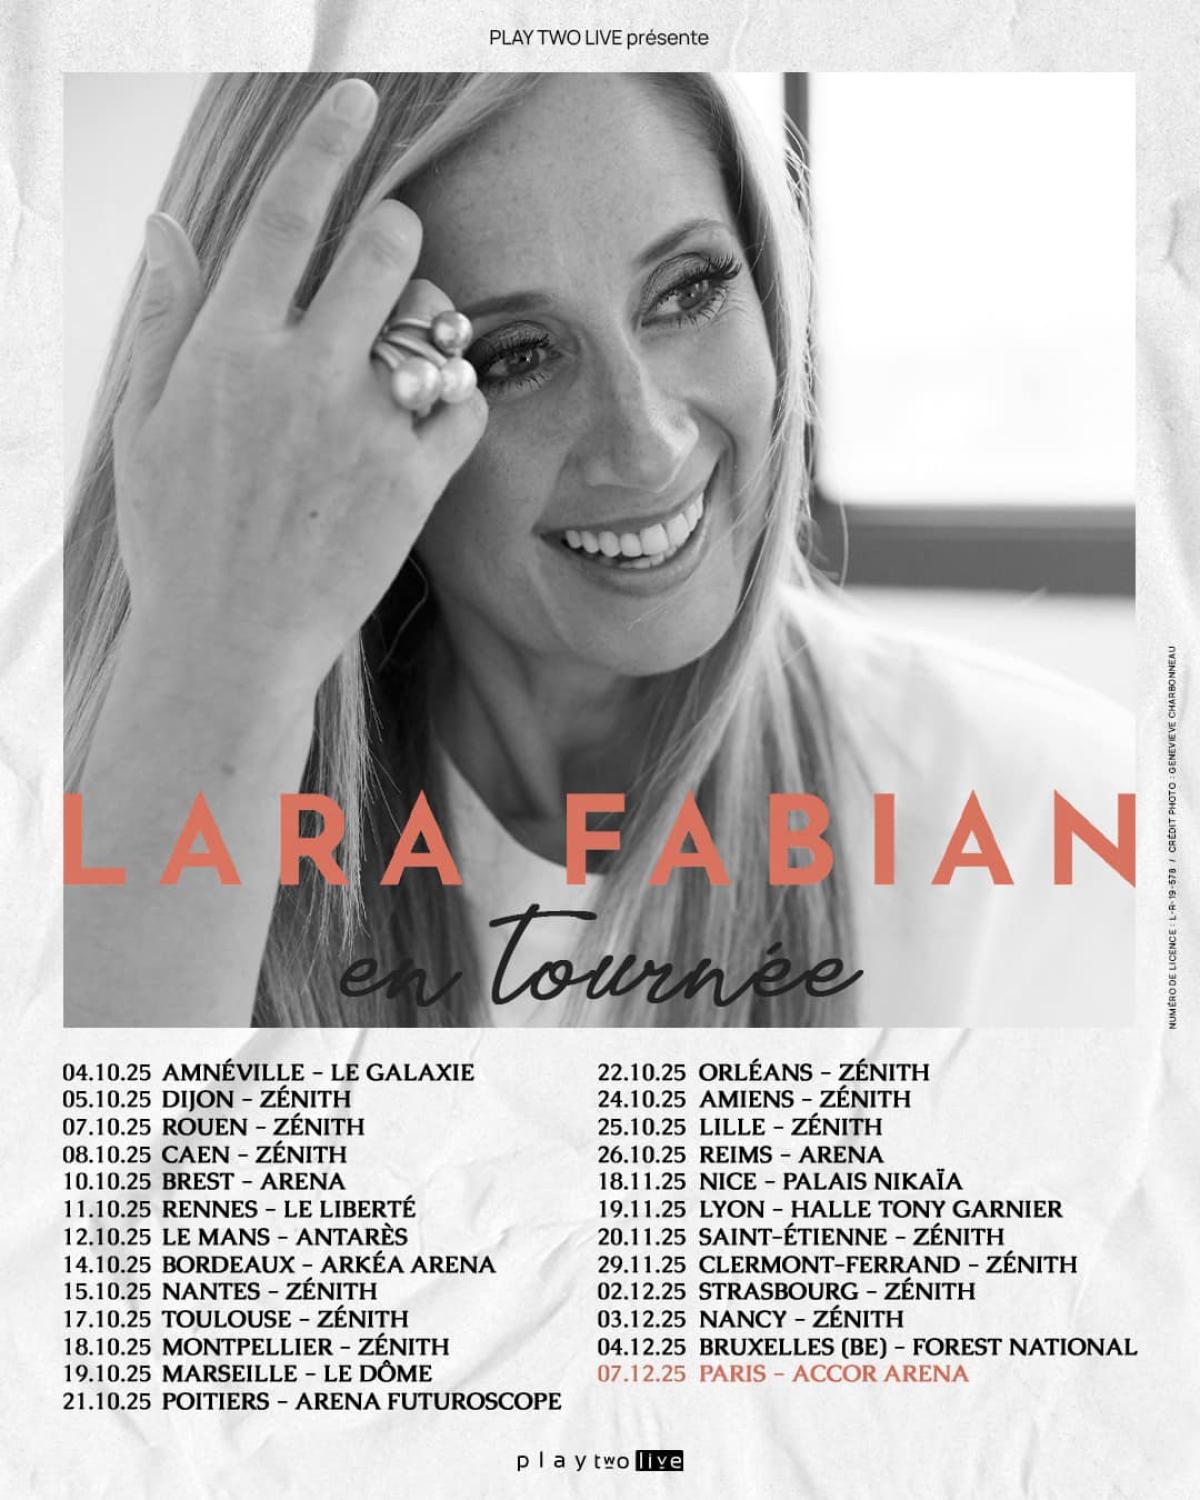 Lara Fabian en Brest Arena Tickets